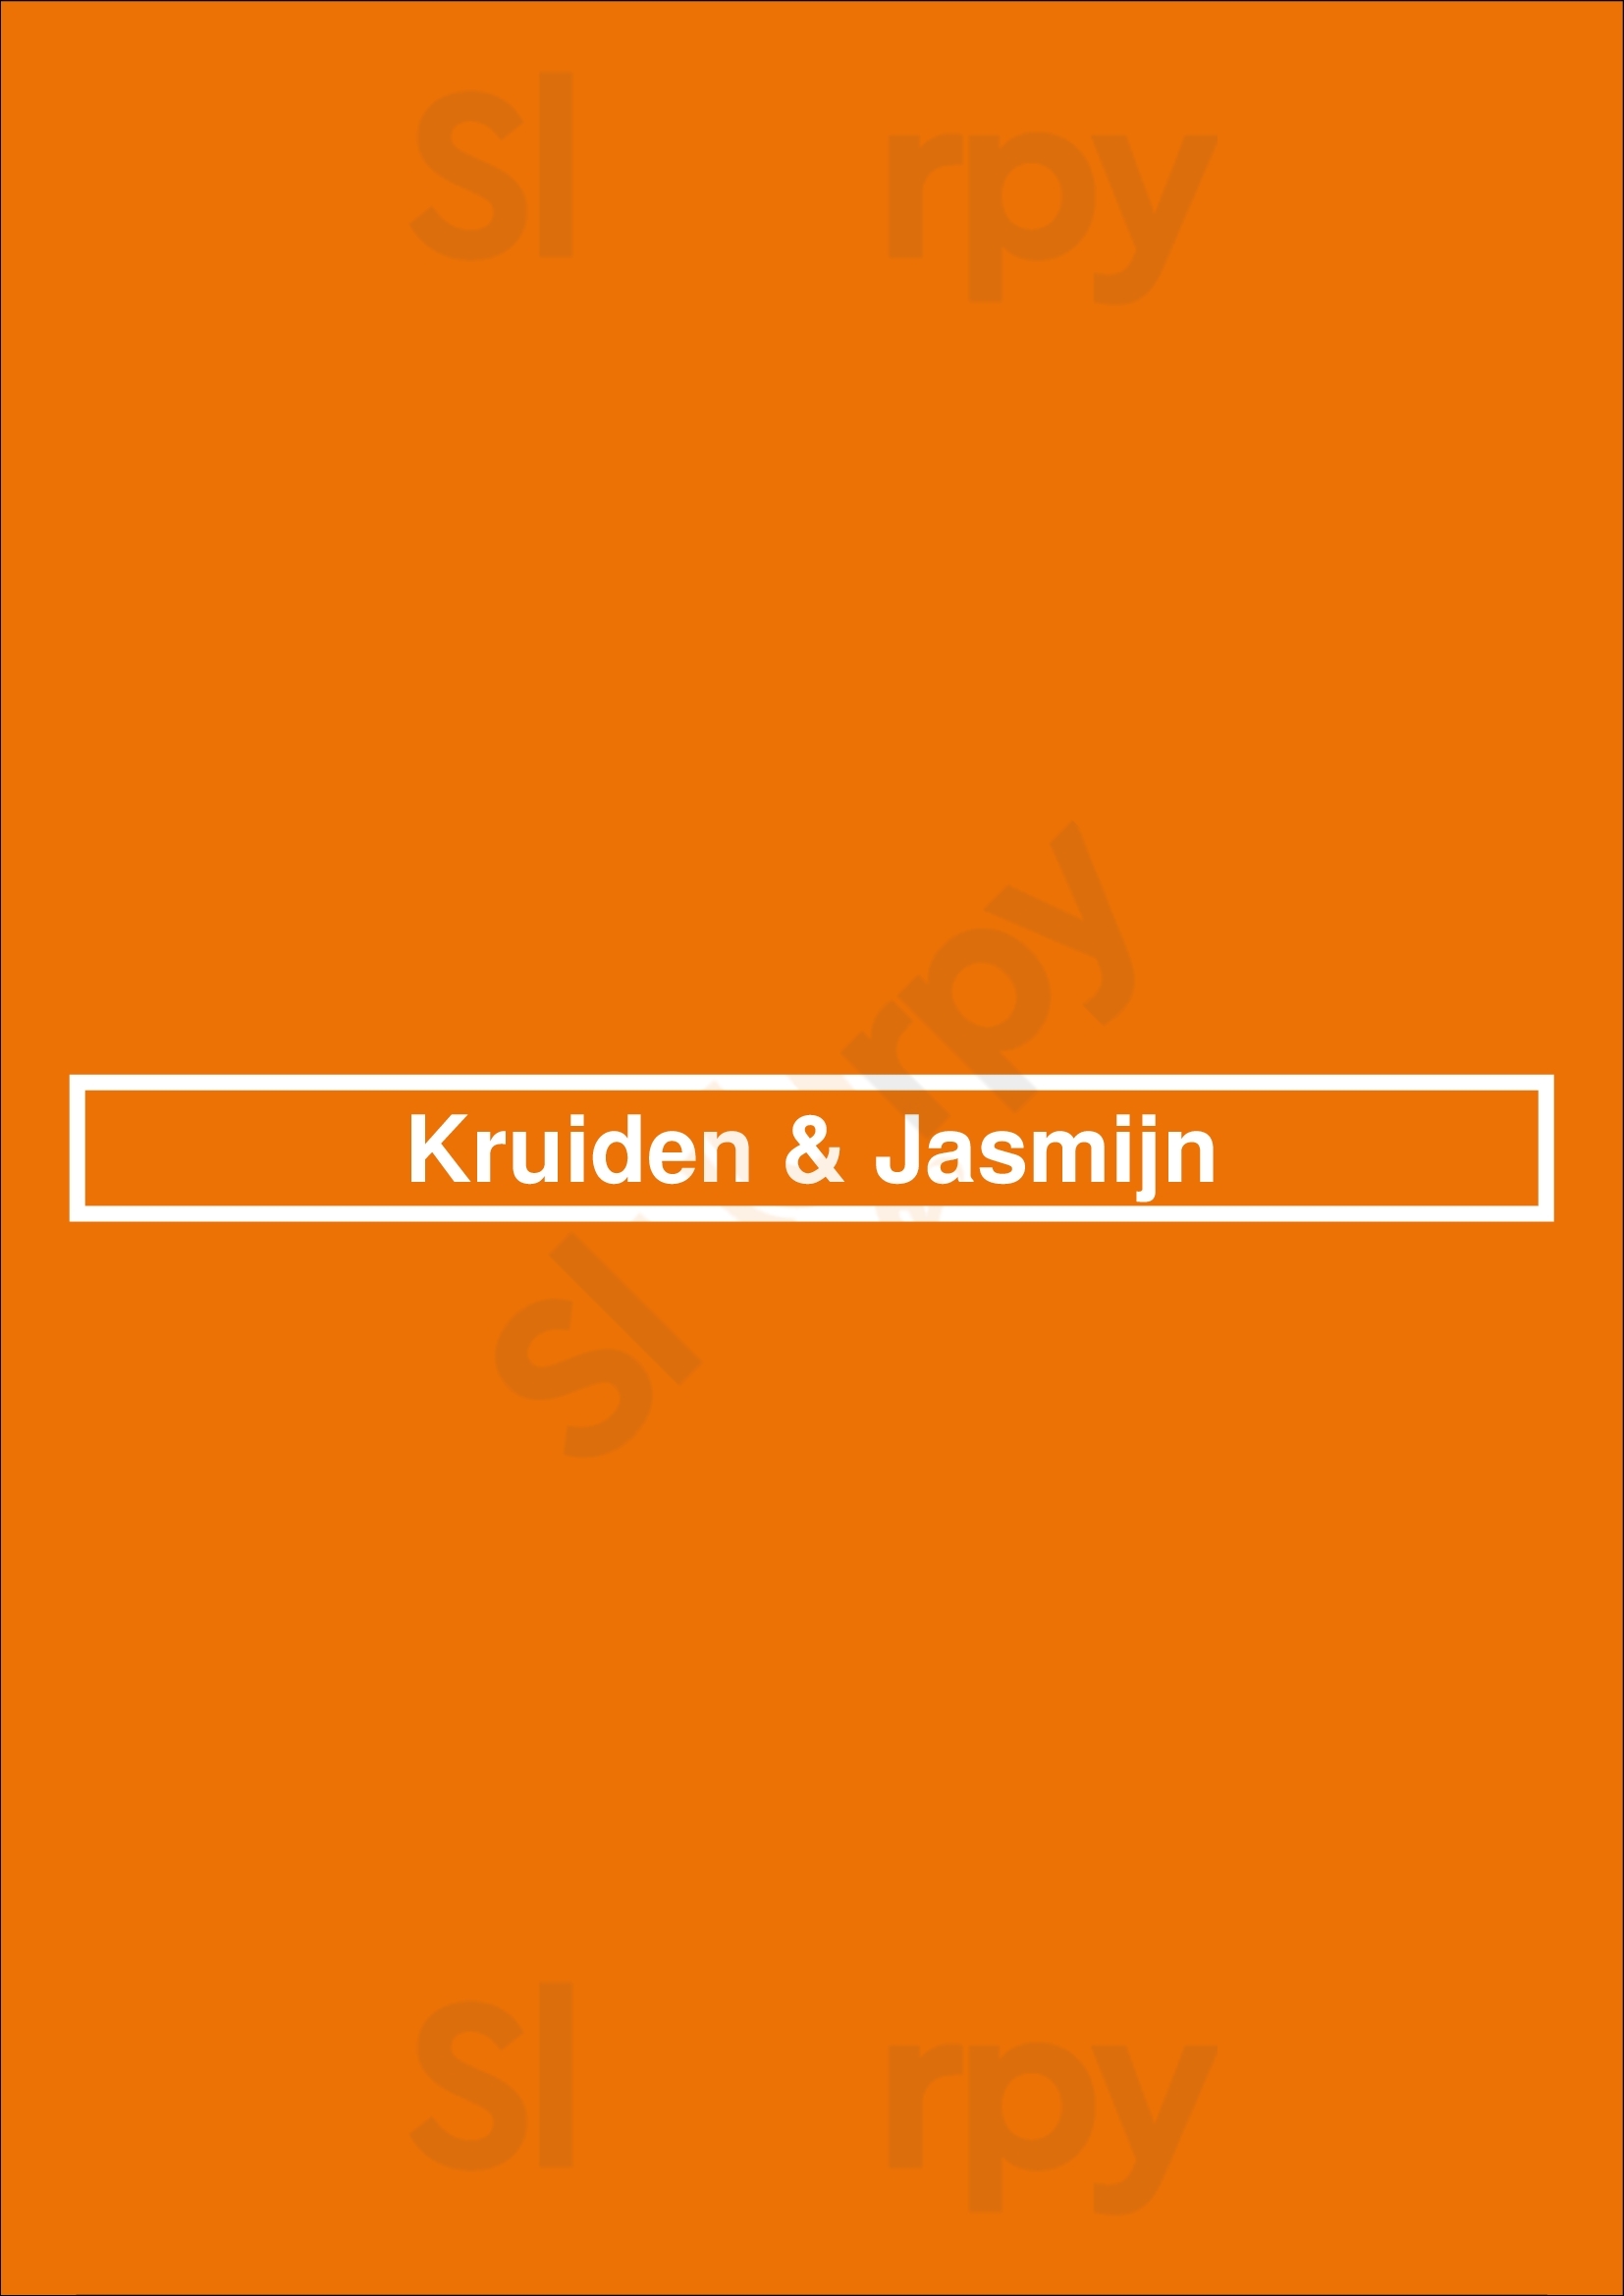 Kruiden & Jasmijn Woudrichem Menu - 1